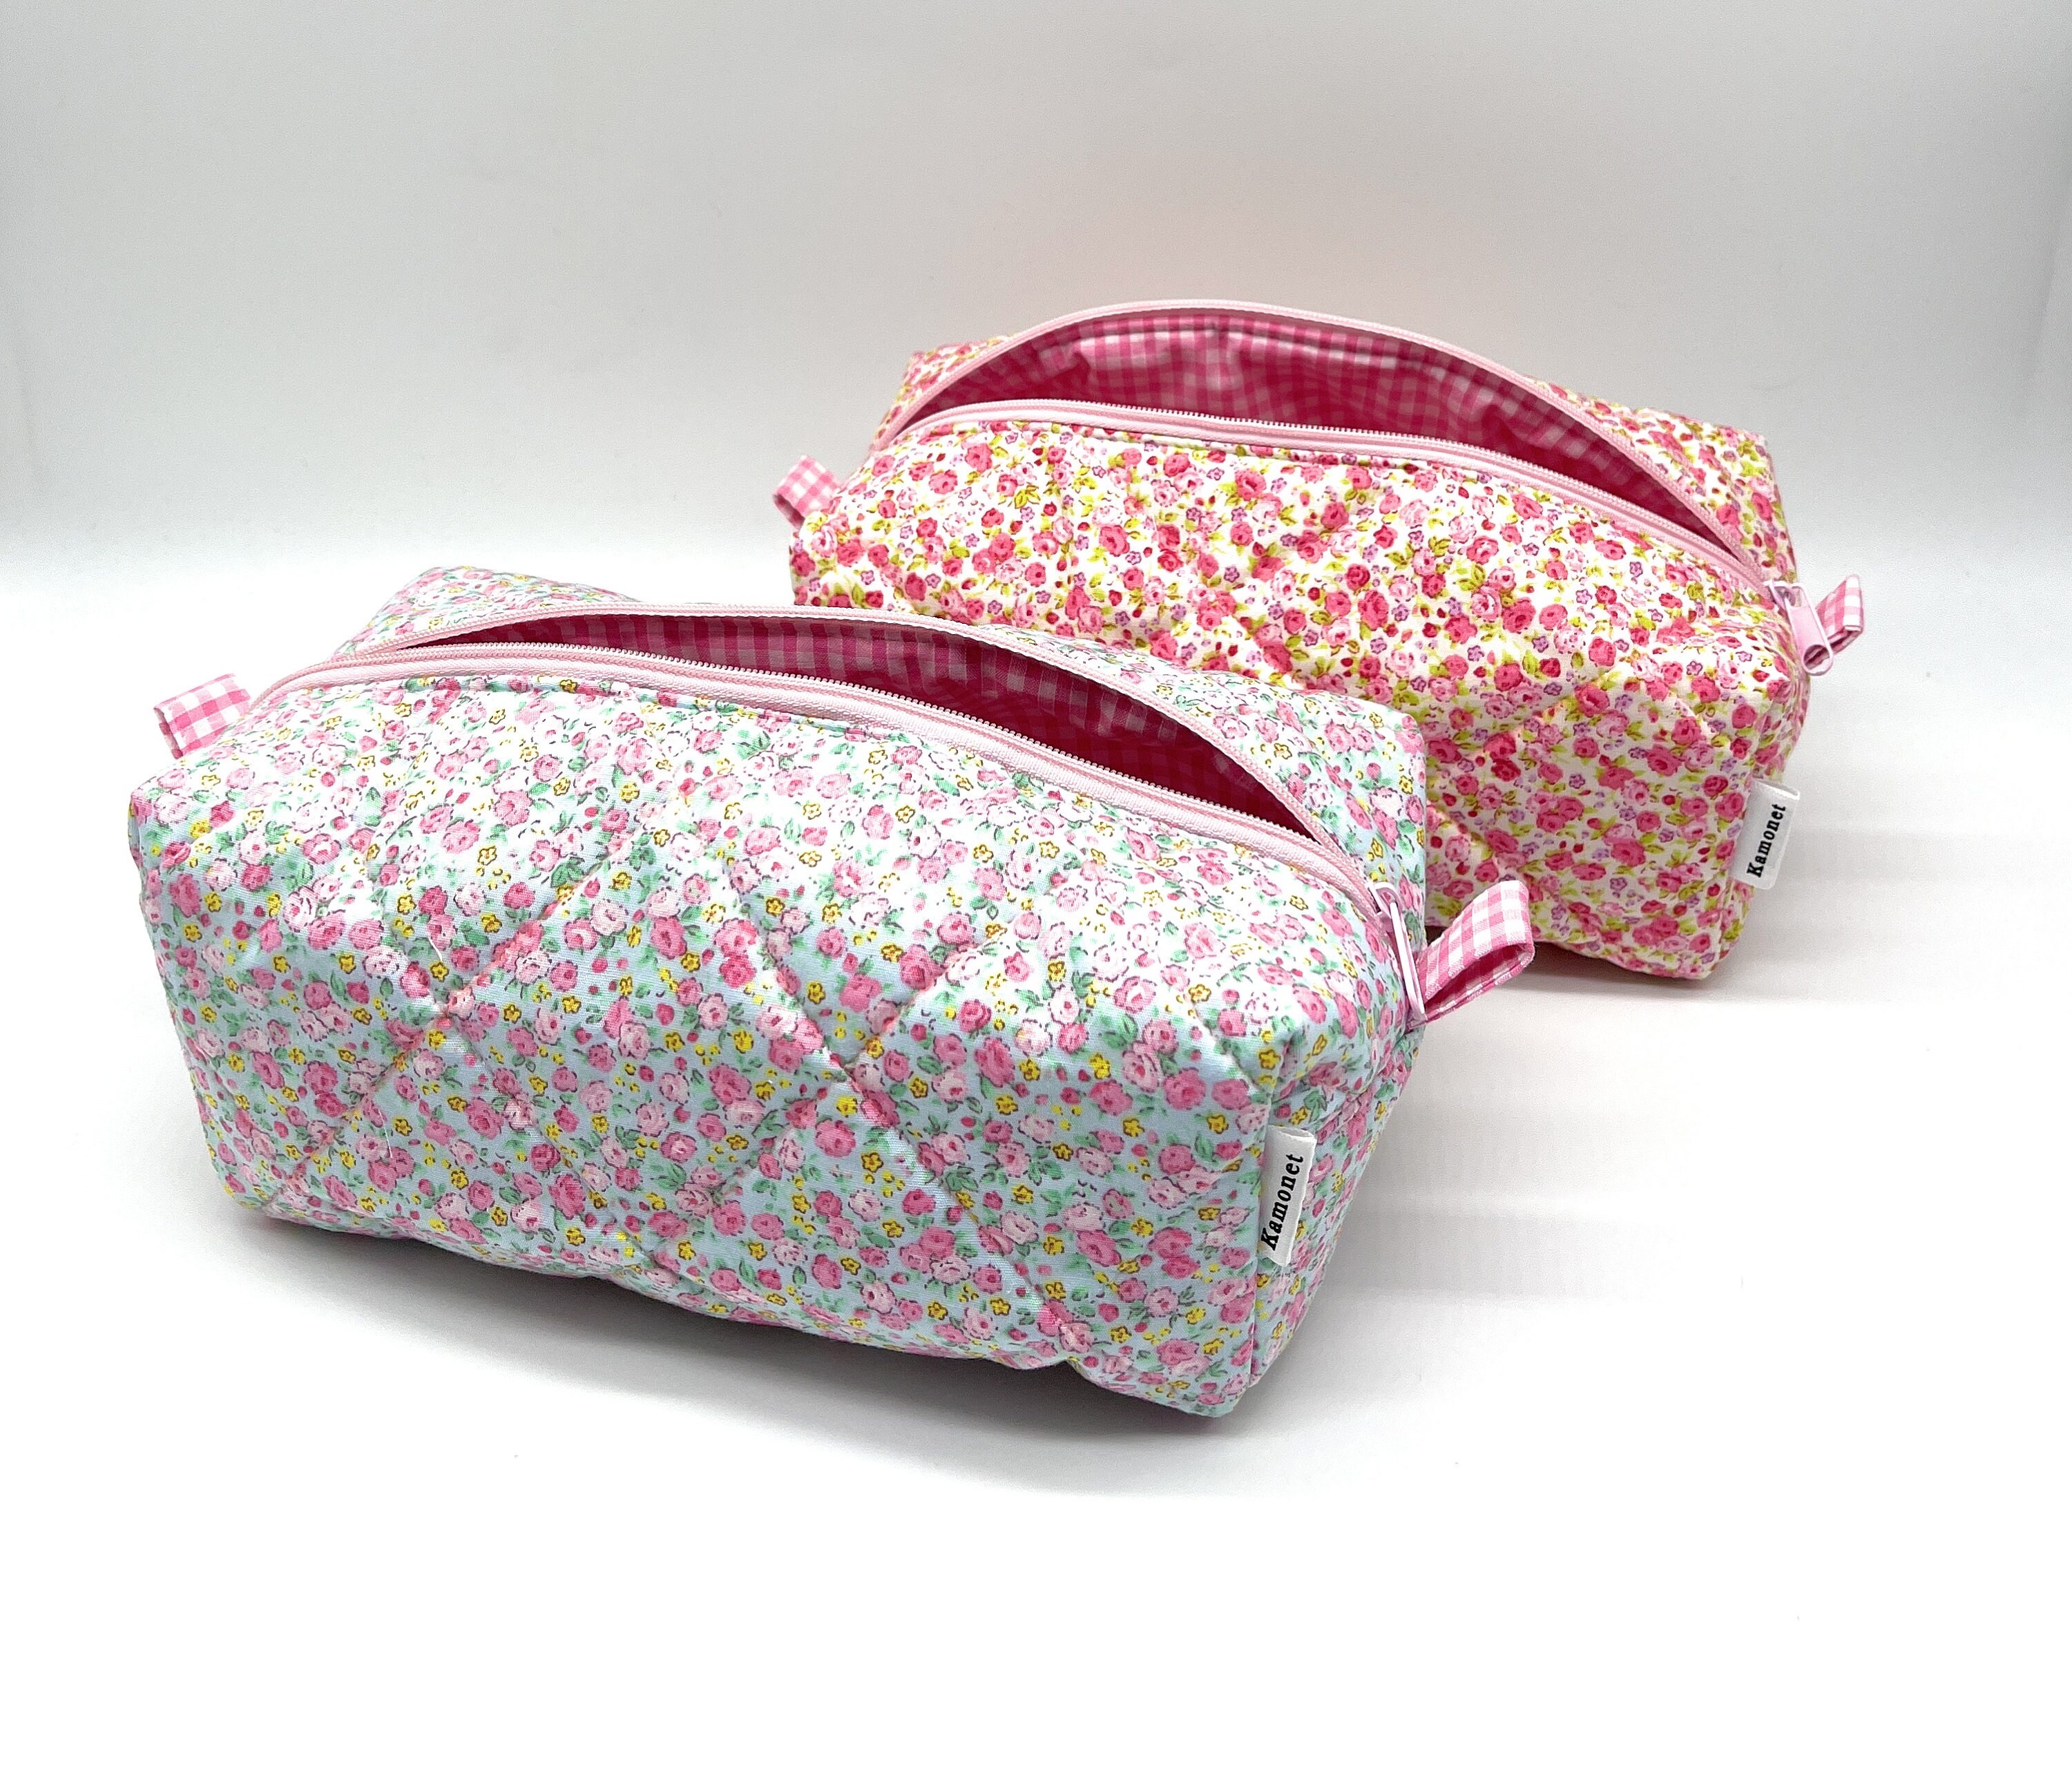 Laundry Pinks Floral Wash Bag, Homewares